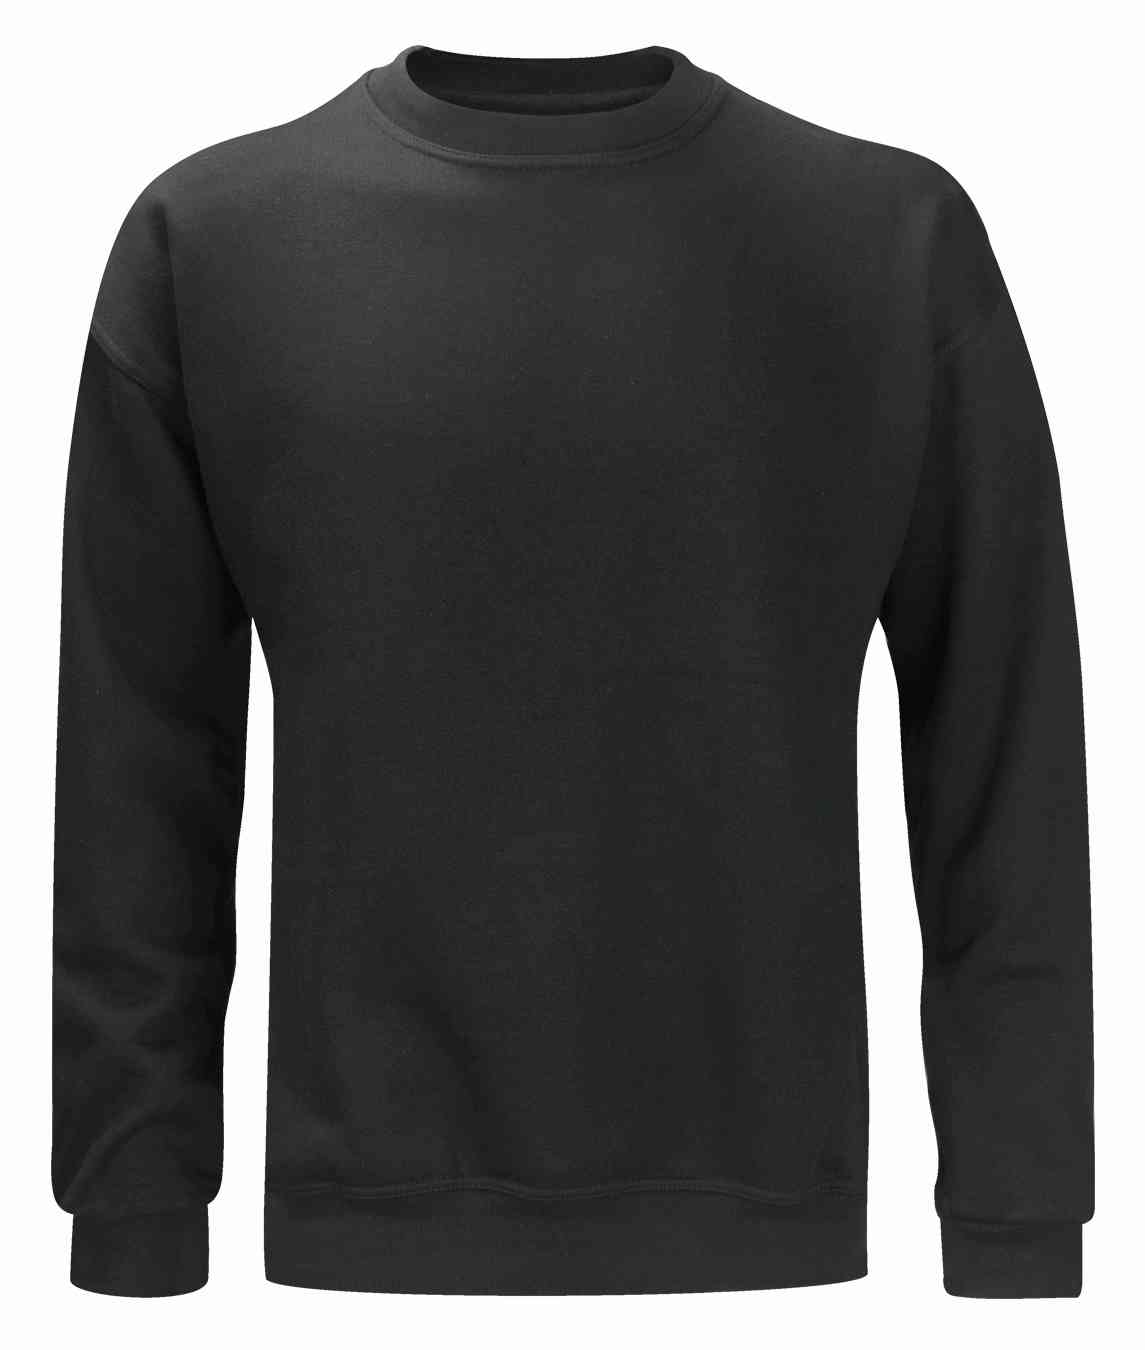 Orbit International Lascar Drop Shoulders Black Polycotton Sweatshirt